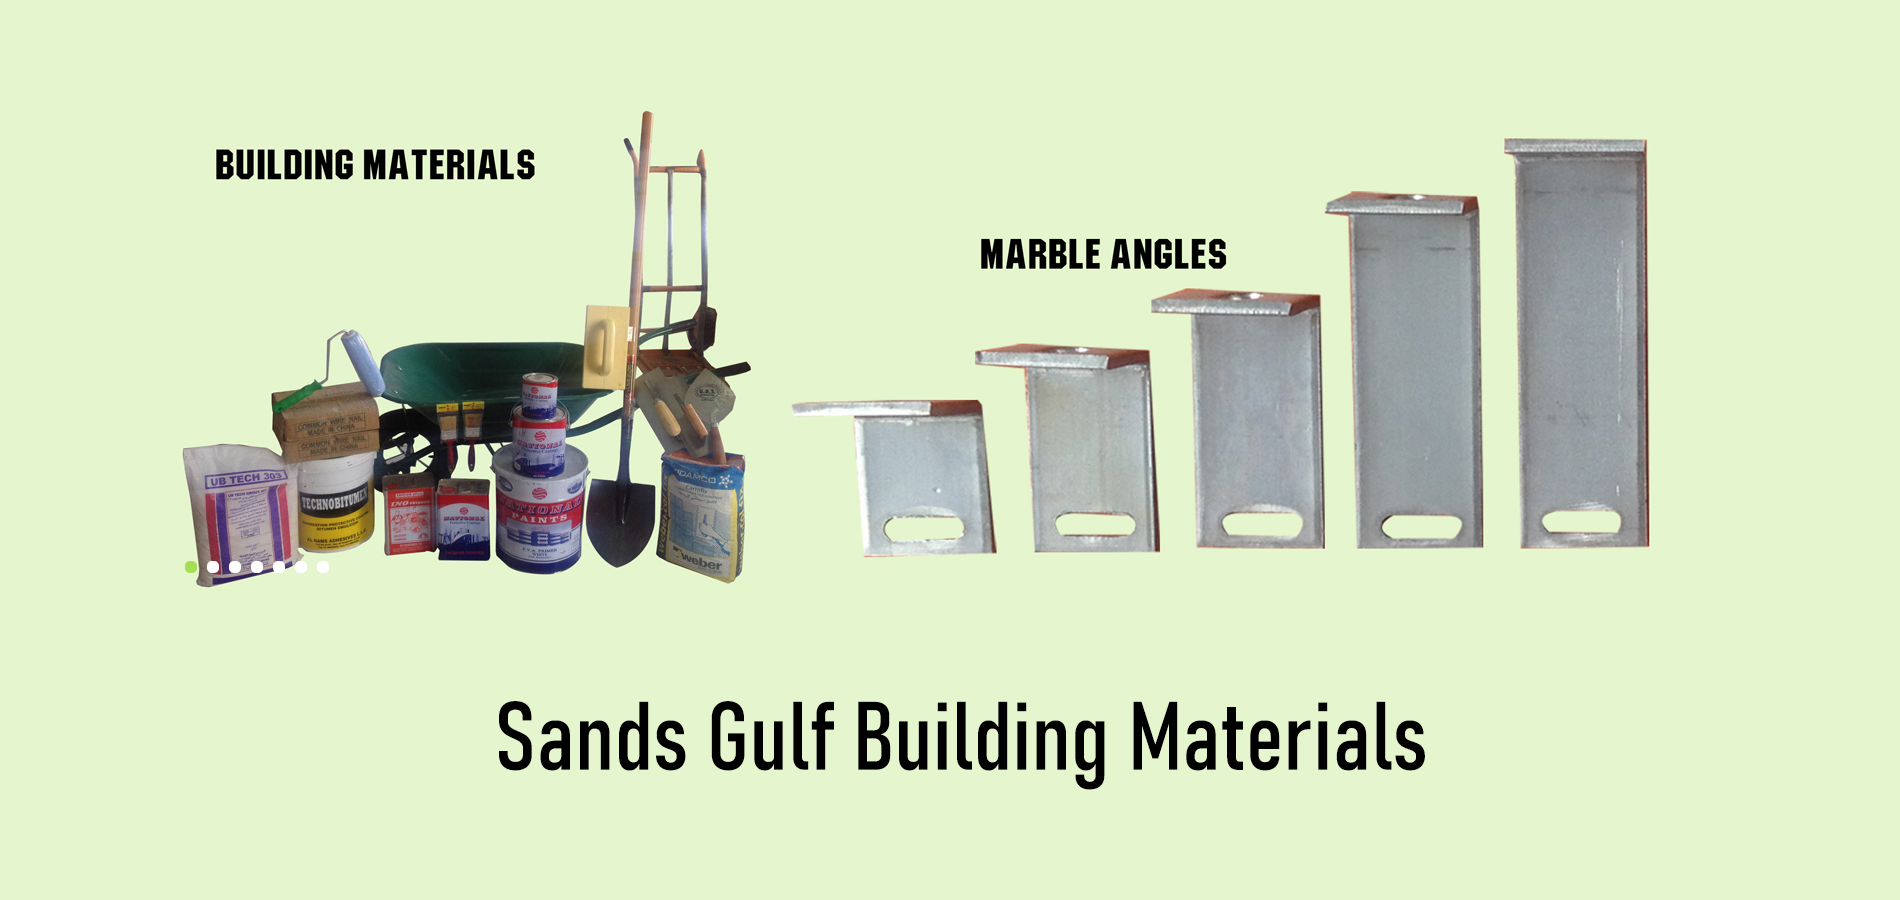 SANDS GULF BUILDING MATERIALS